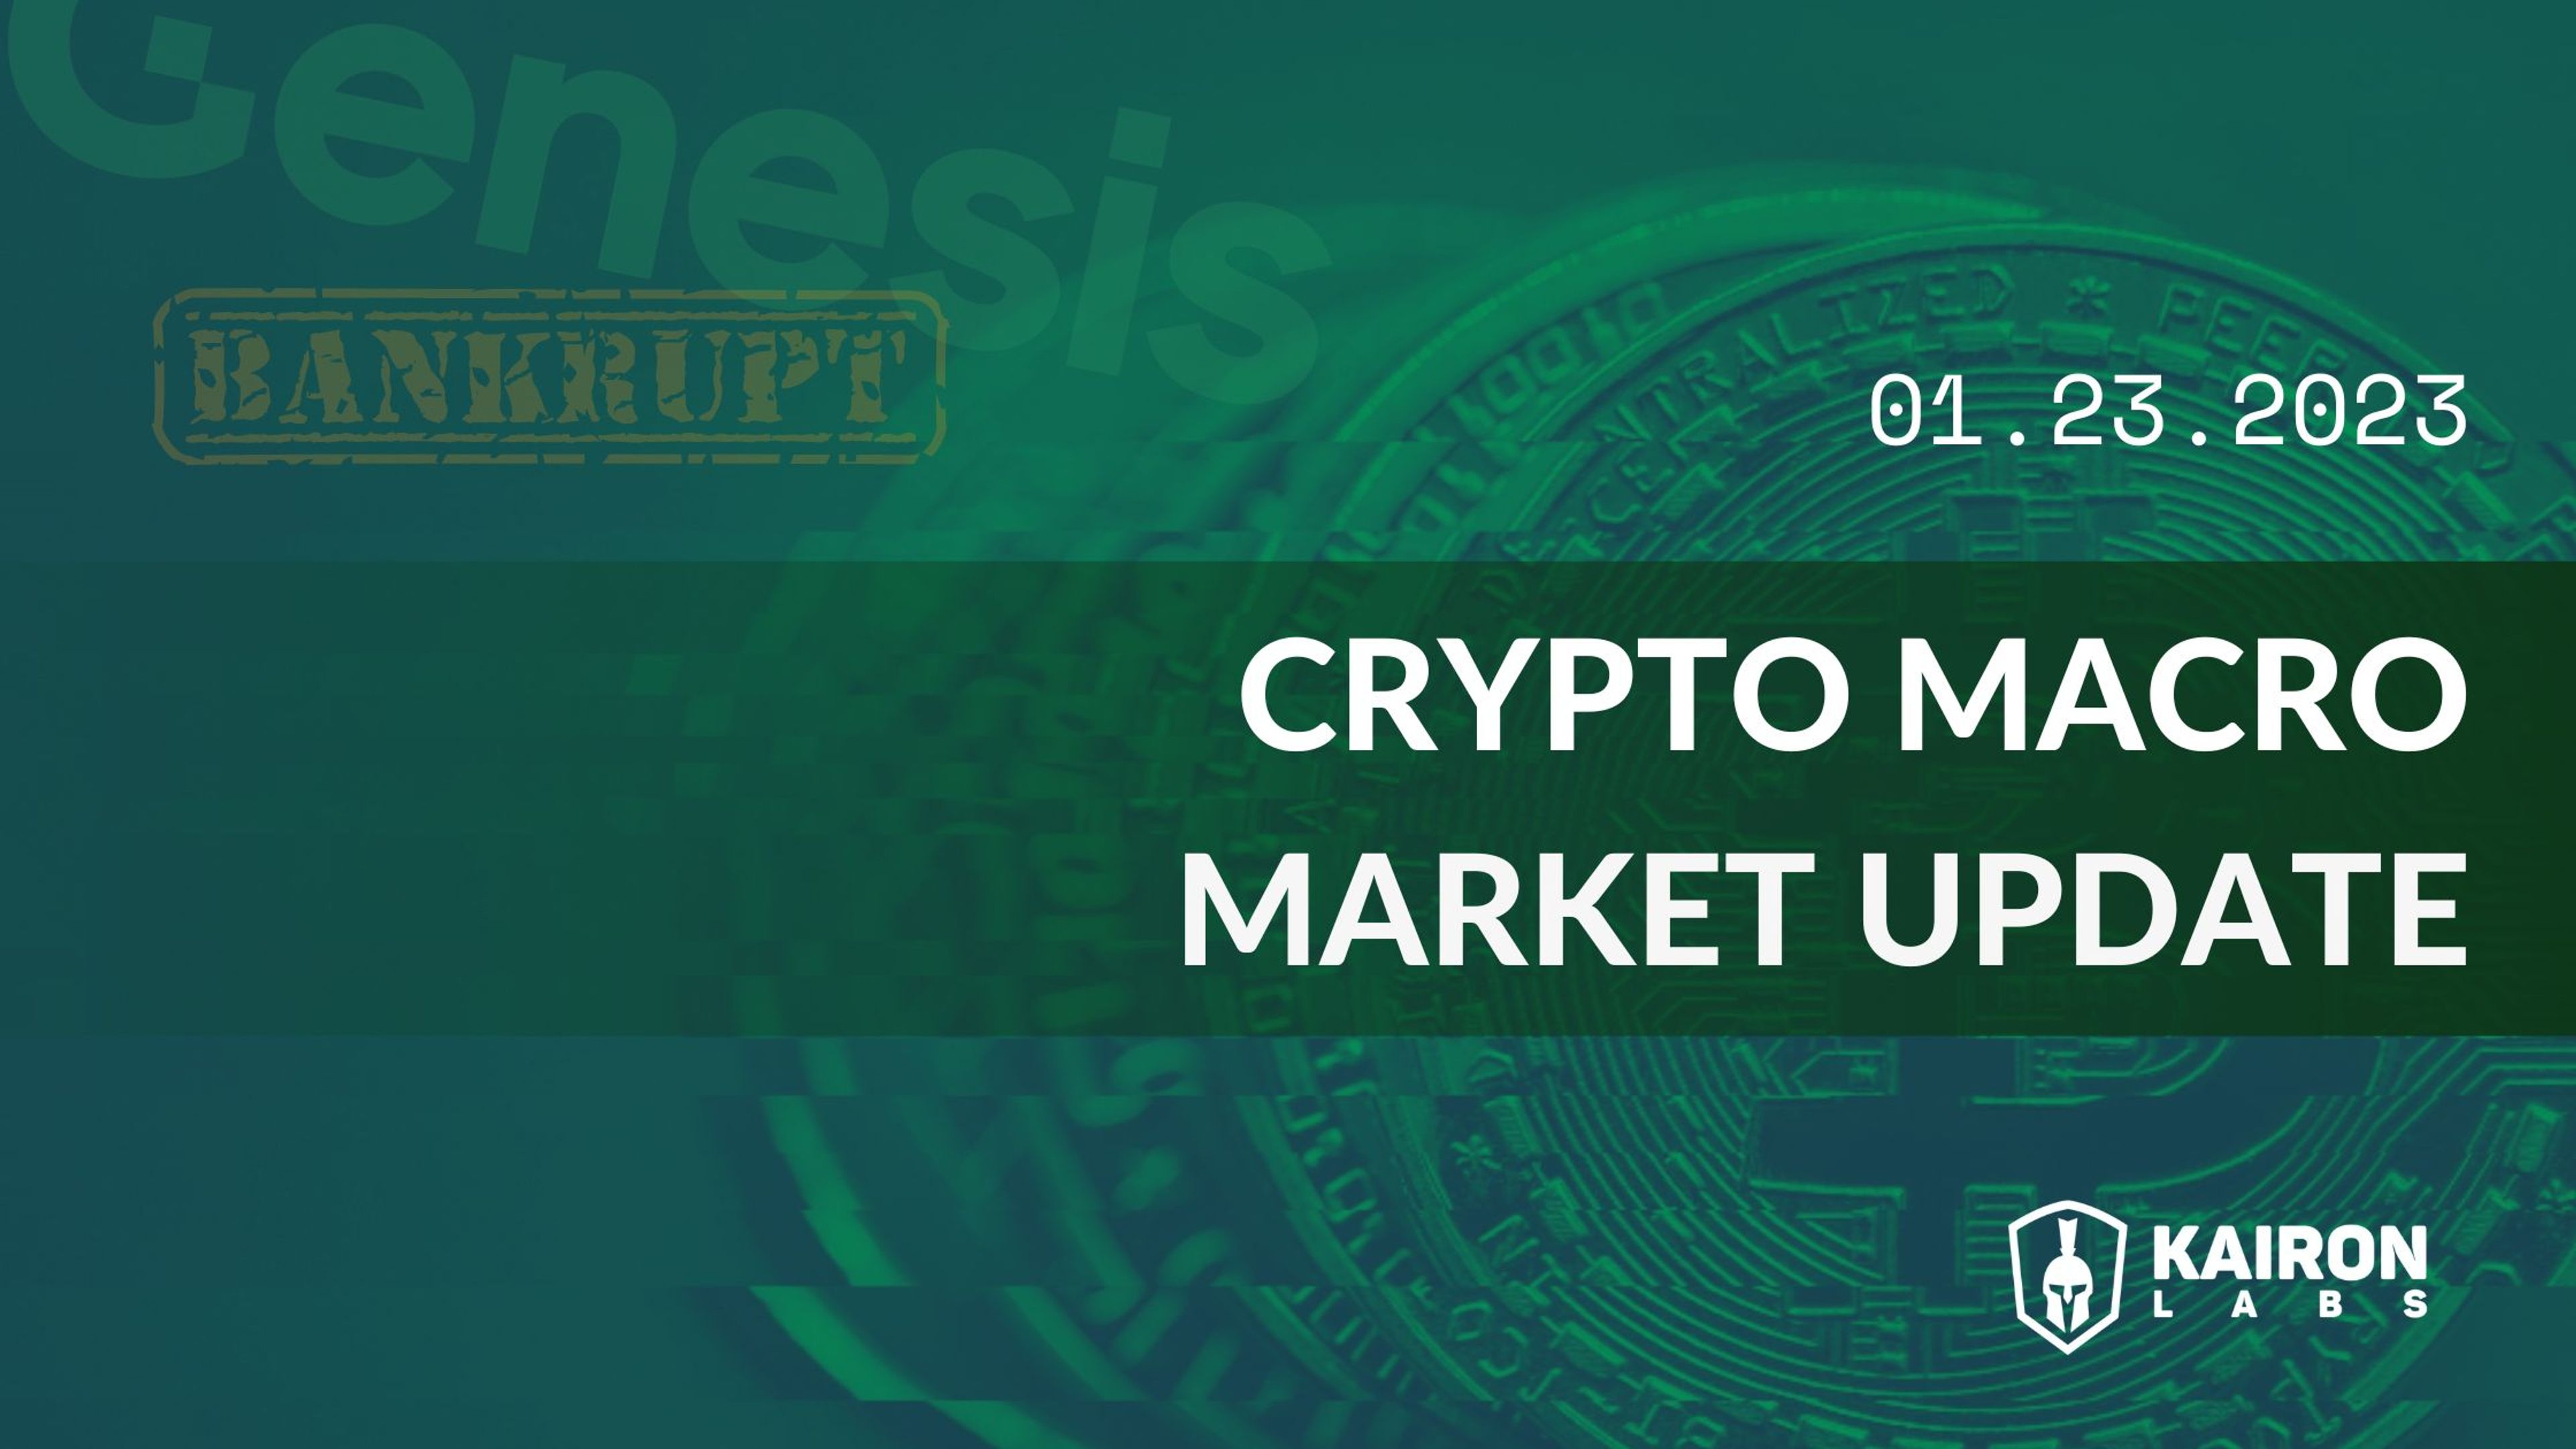 Kairon Labs - Leading Crypto Market Maker (Market Update) January 23, 2023